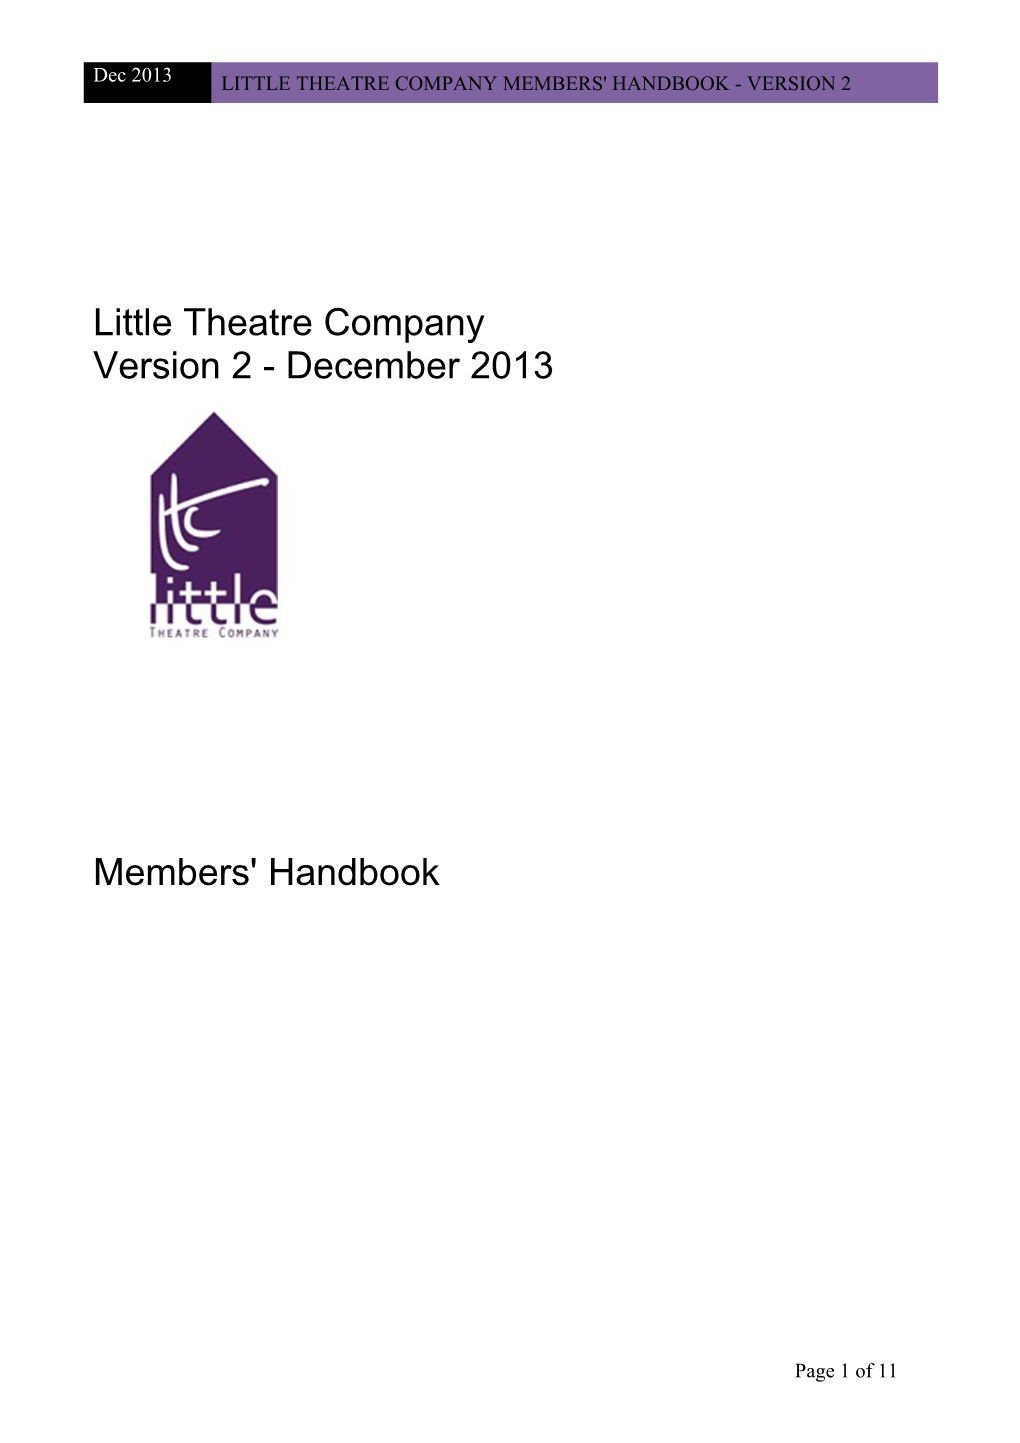 Little Theatre Company Members Handbook - Version 1